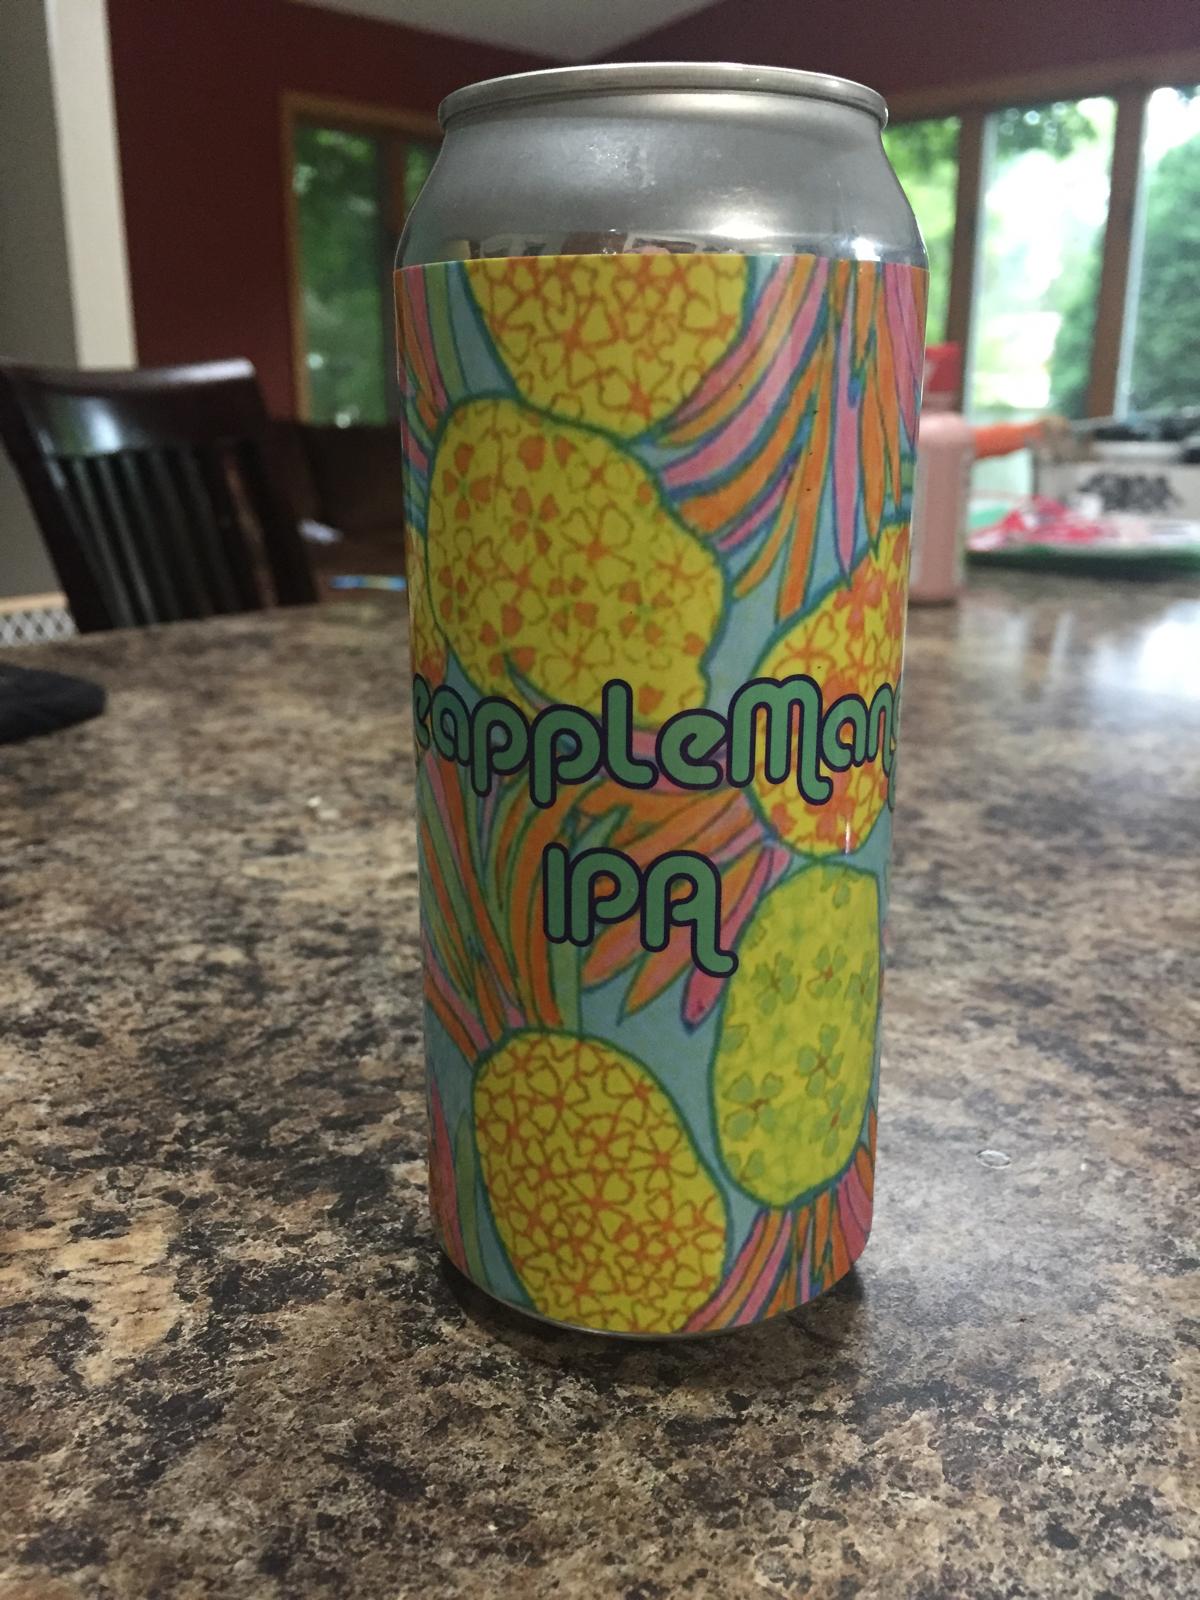 Pineapple Mango IPA